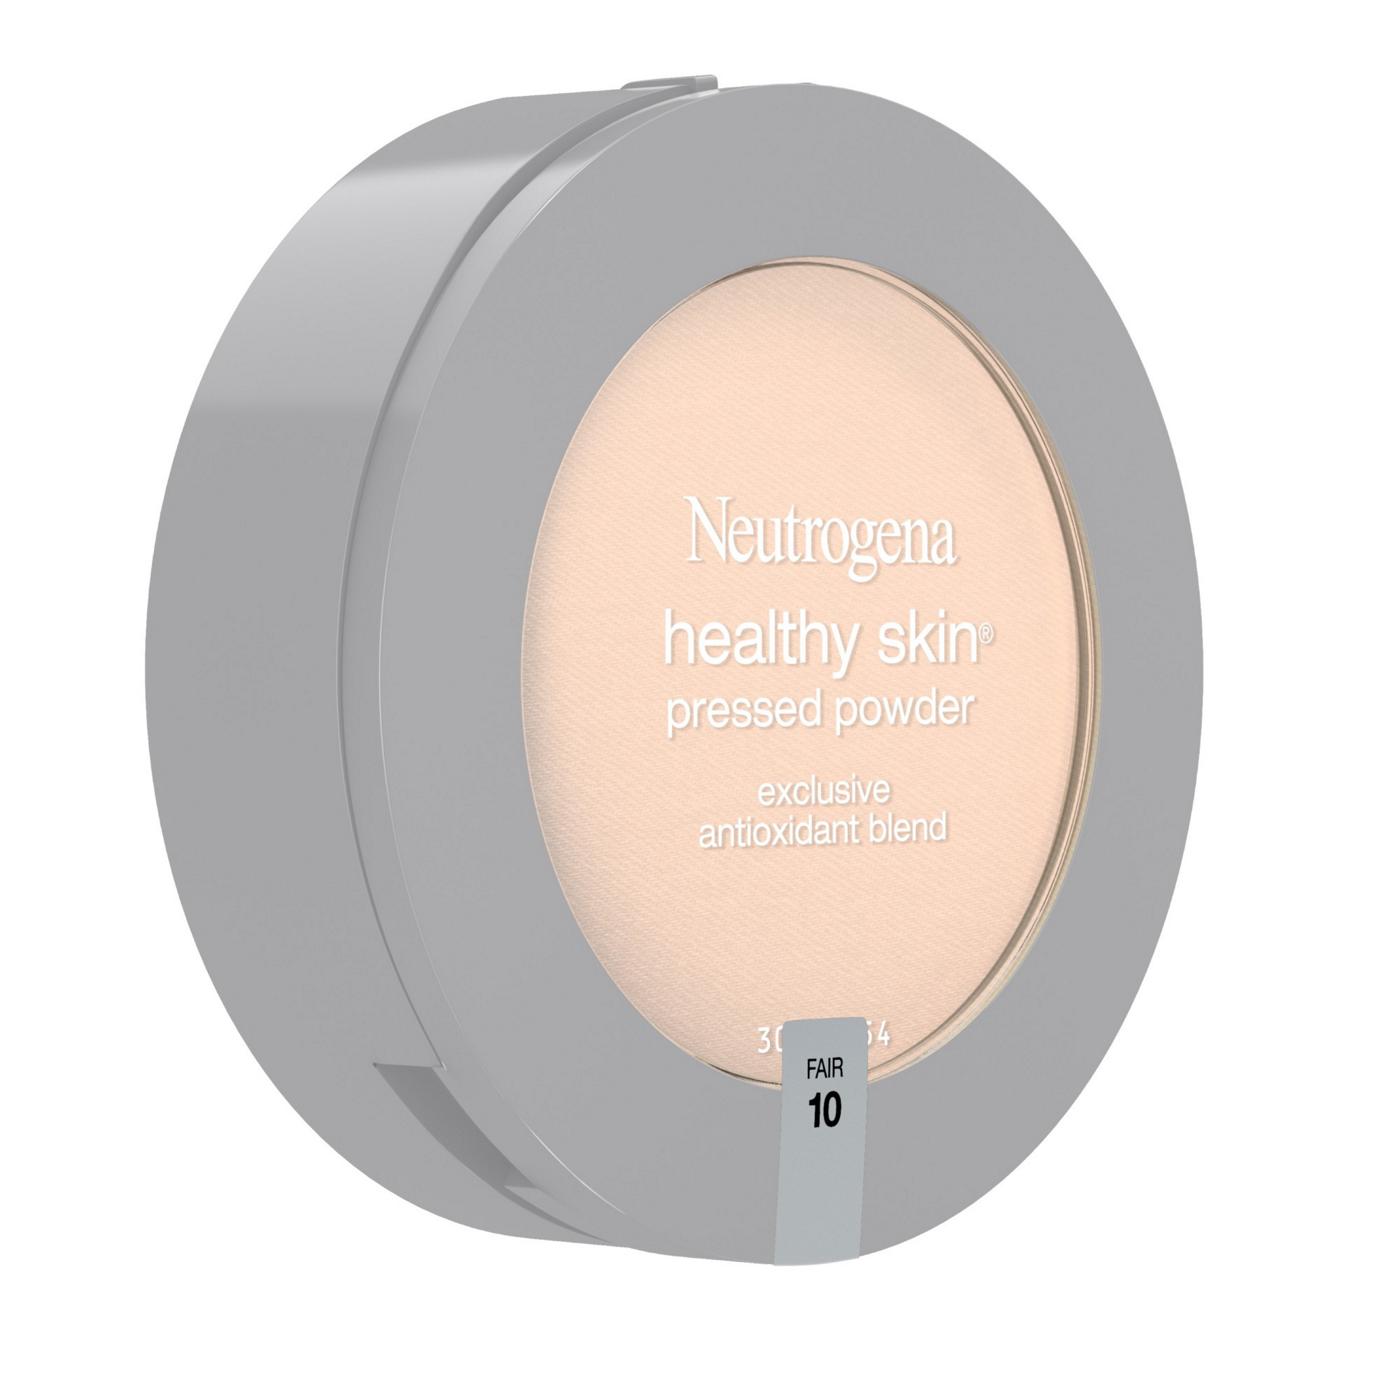 Neutrogena Healthy Skin Pressed Powder 10 Fair; image 5 of 5